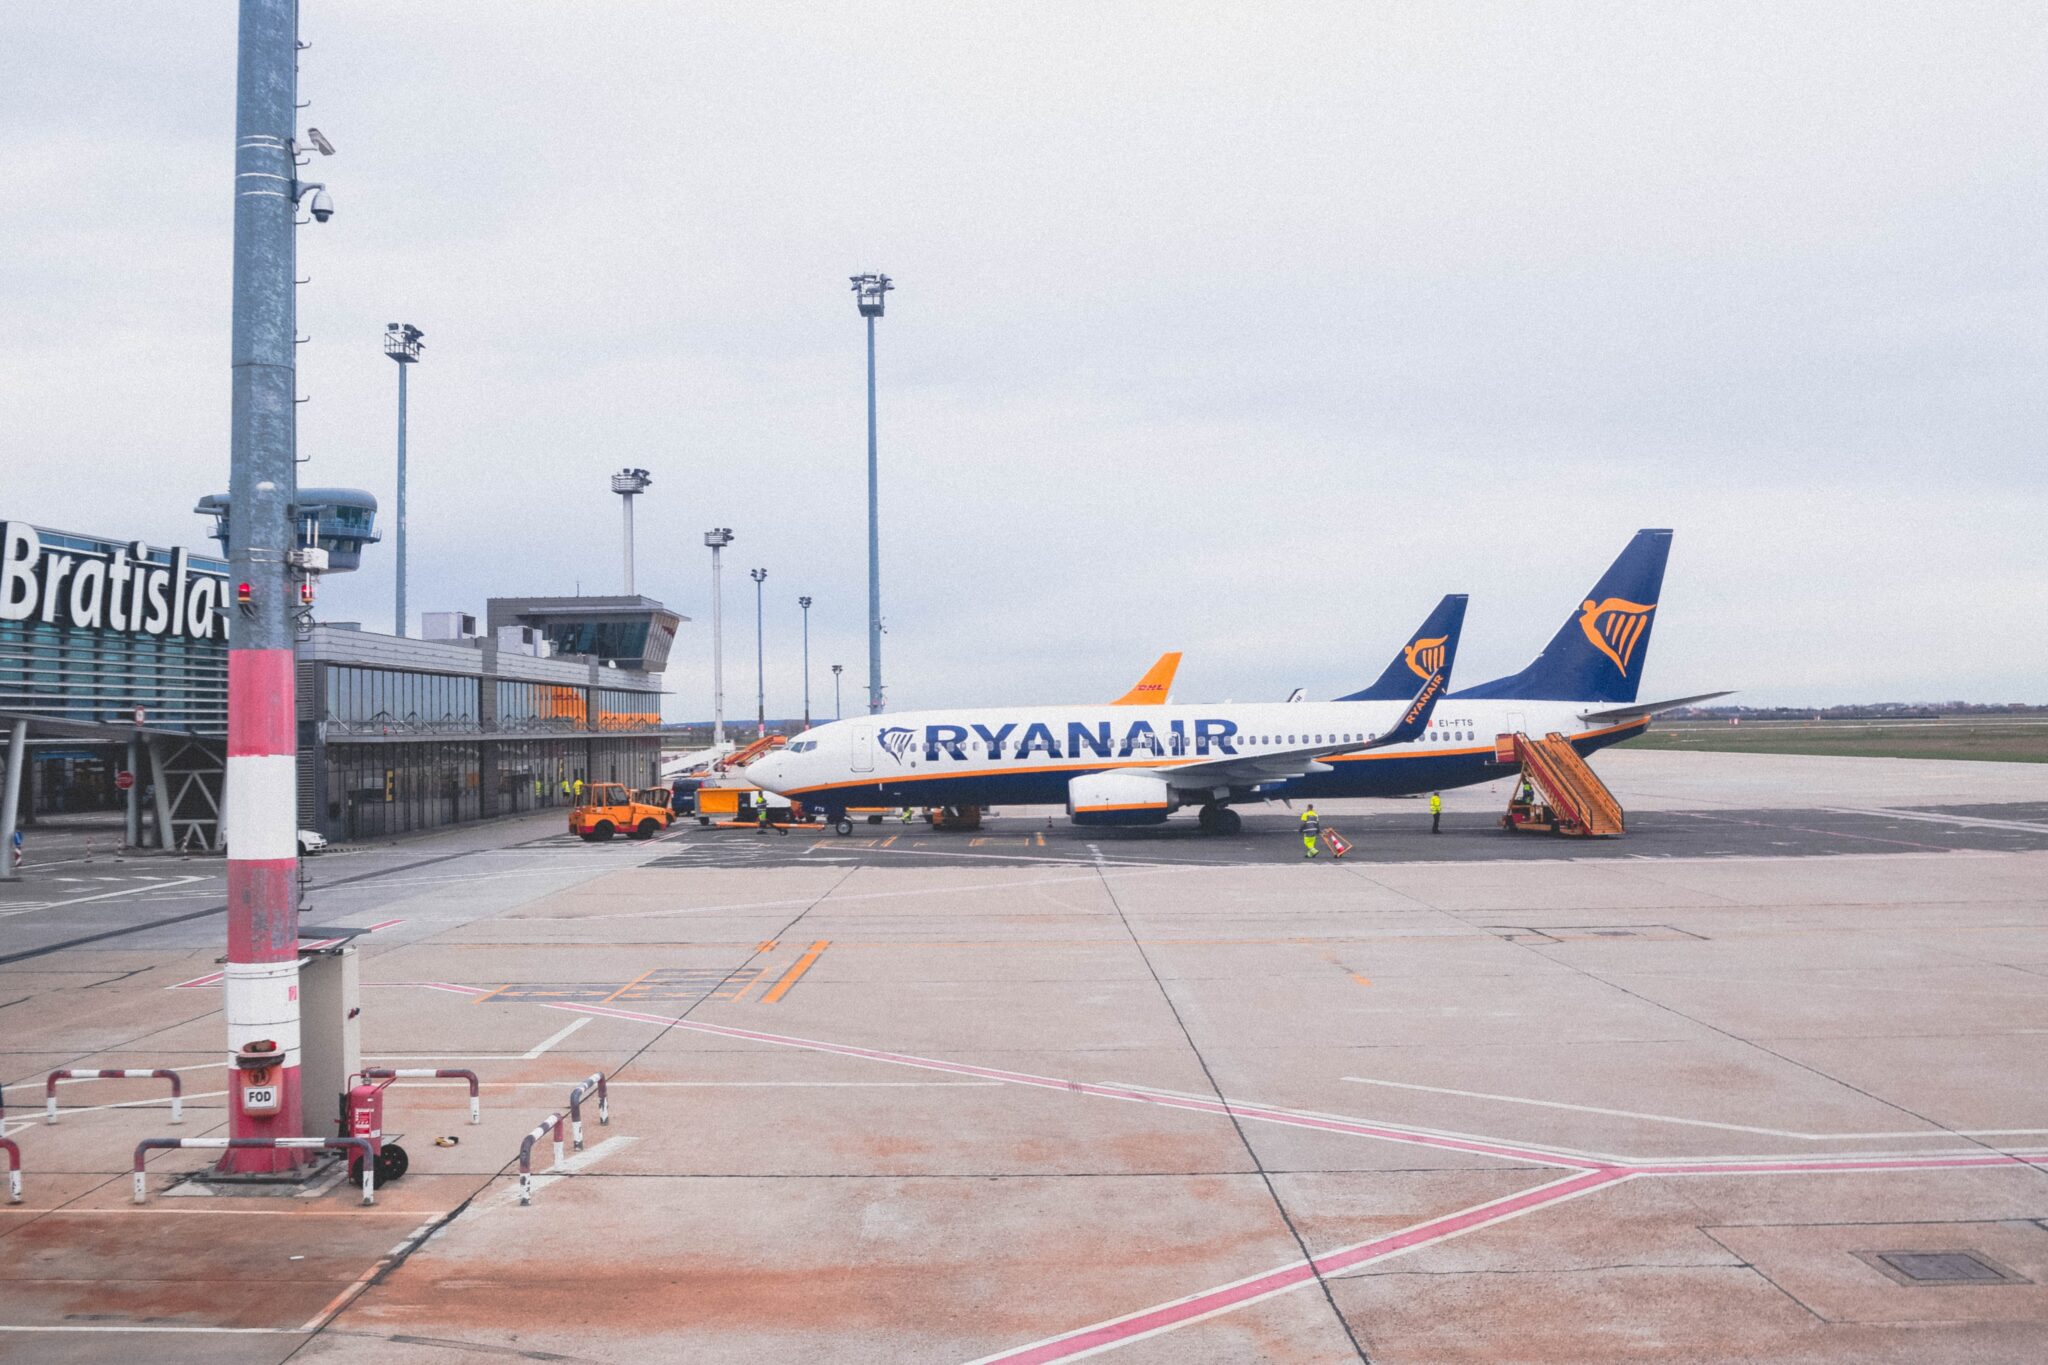 A Ryanair flight. Lastminute.com is now allowed to sell Ryanair flights in Switzerland. Source: Unsplash